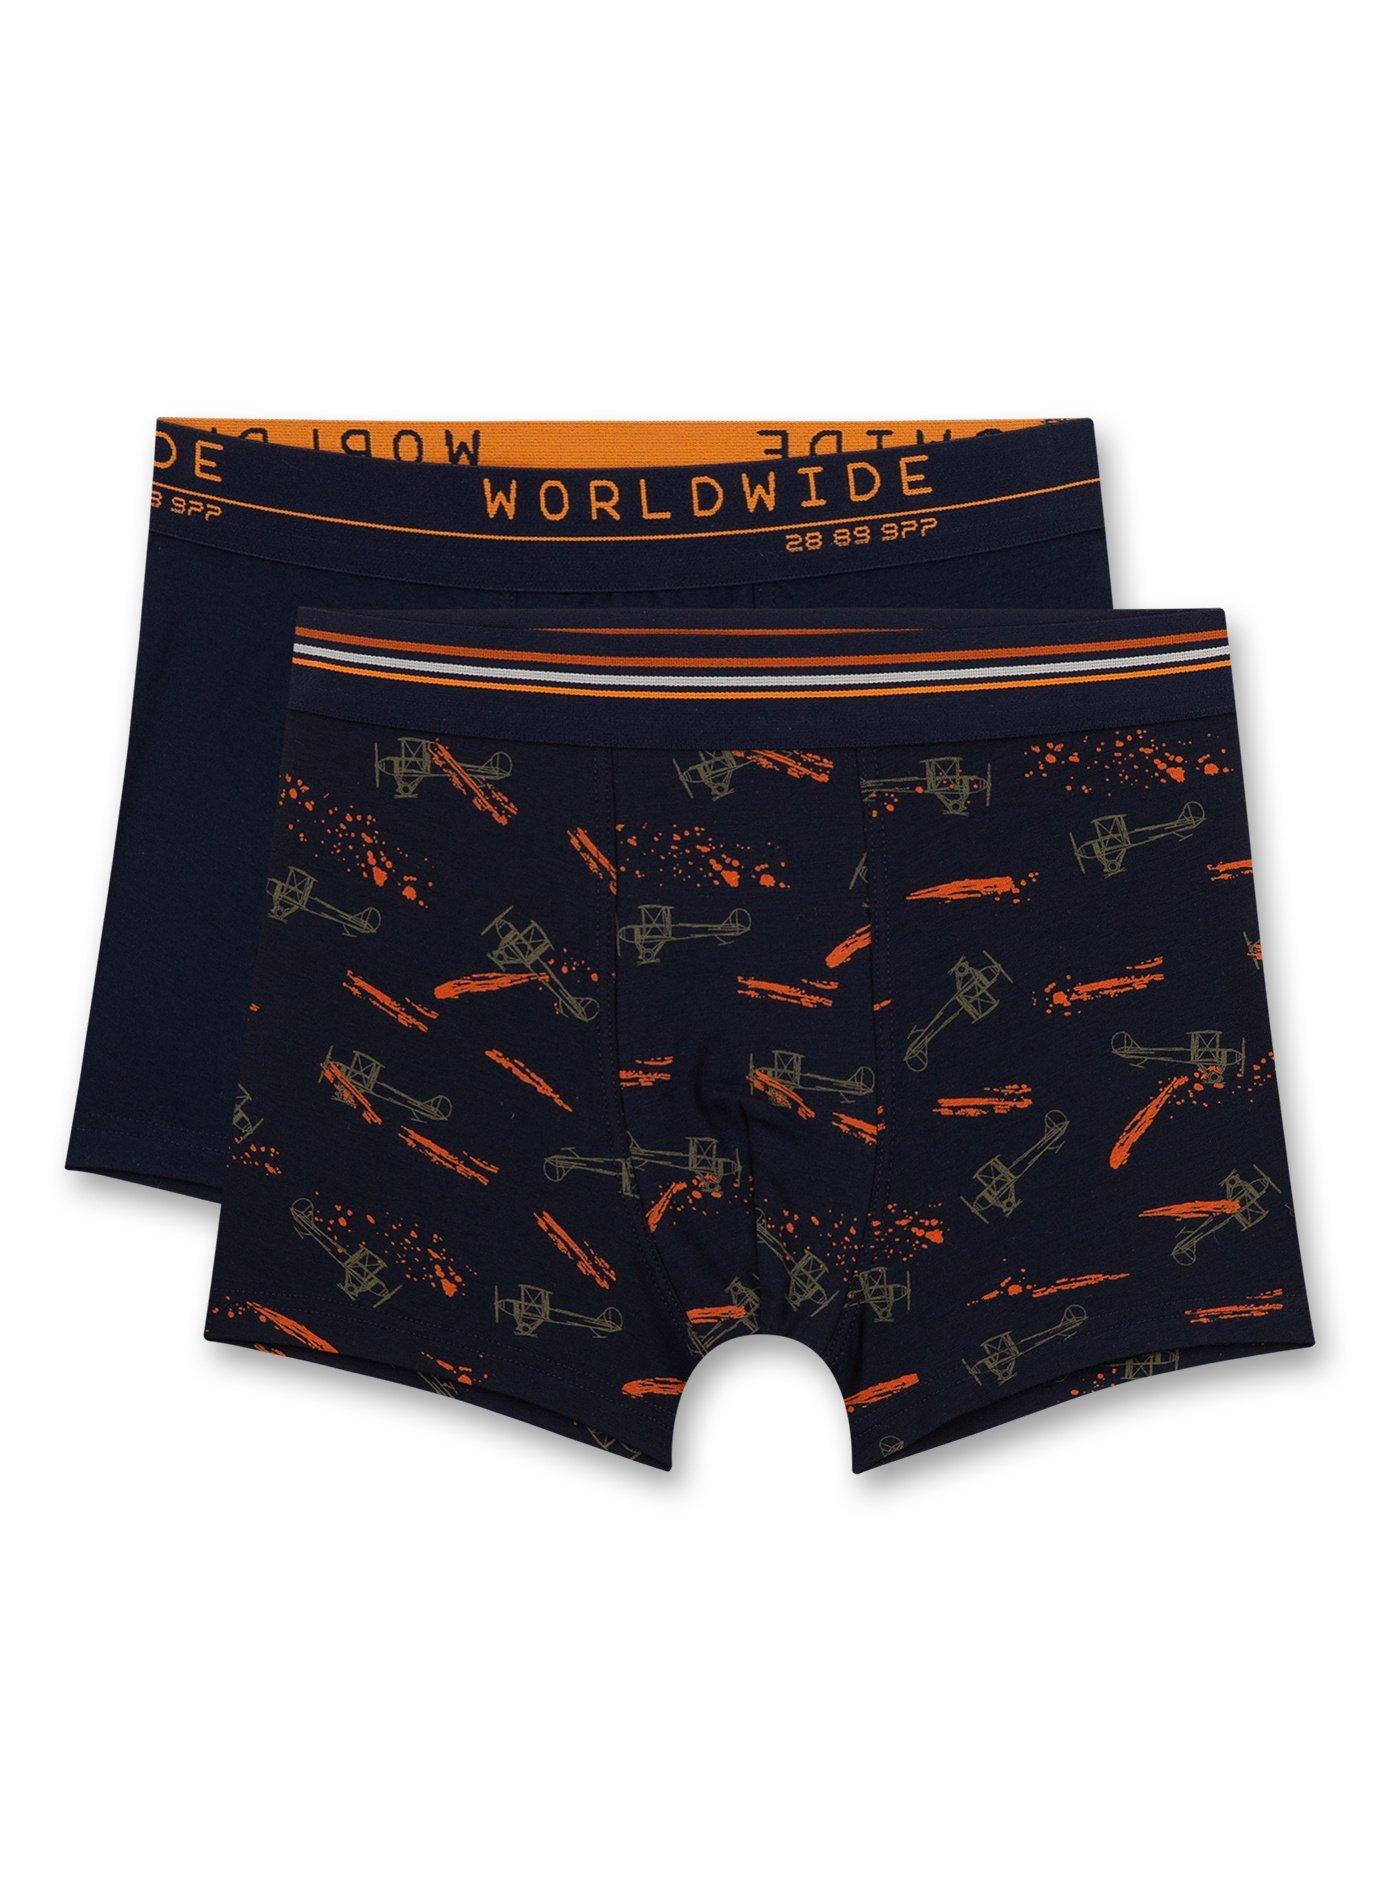 Sanetta  Jungen-Shorts (Doppelpack) Worldwide 